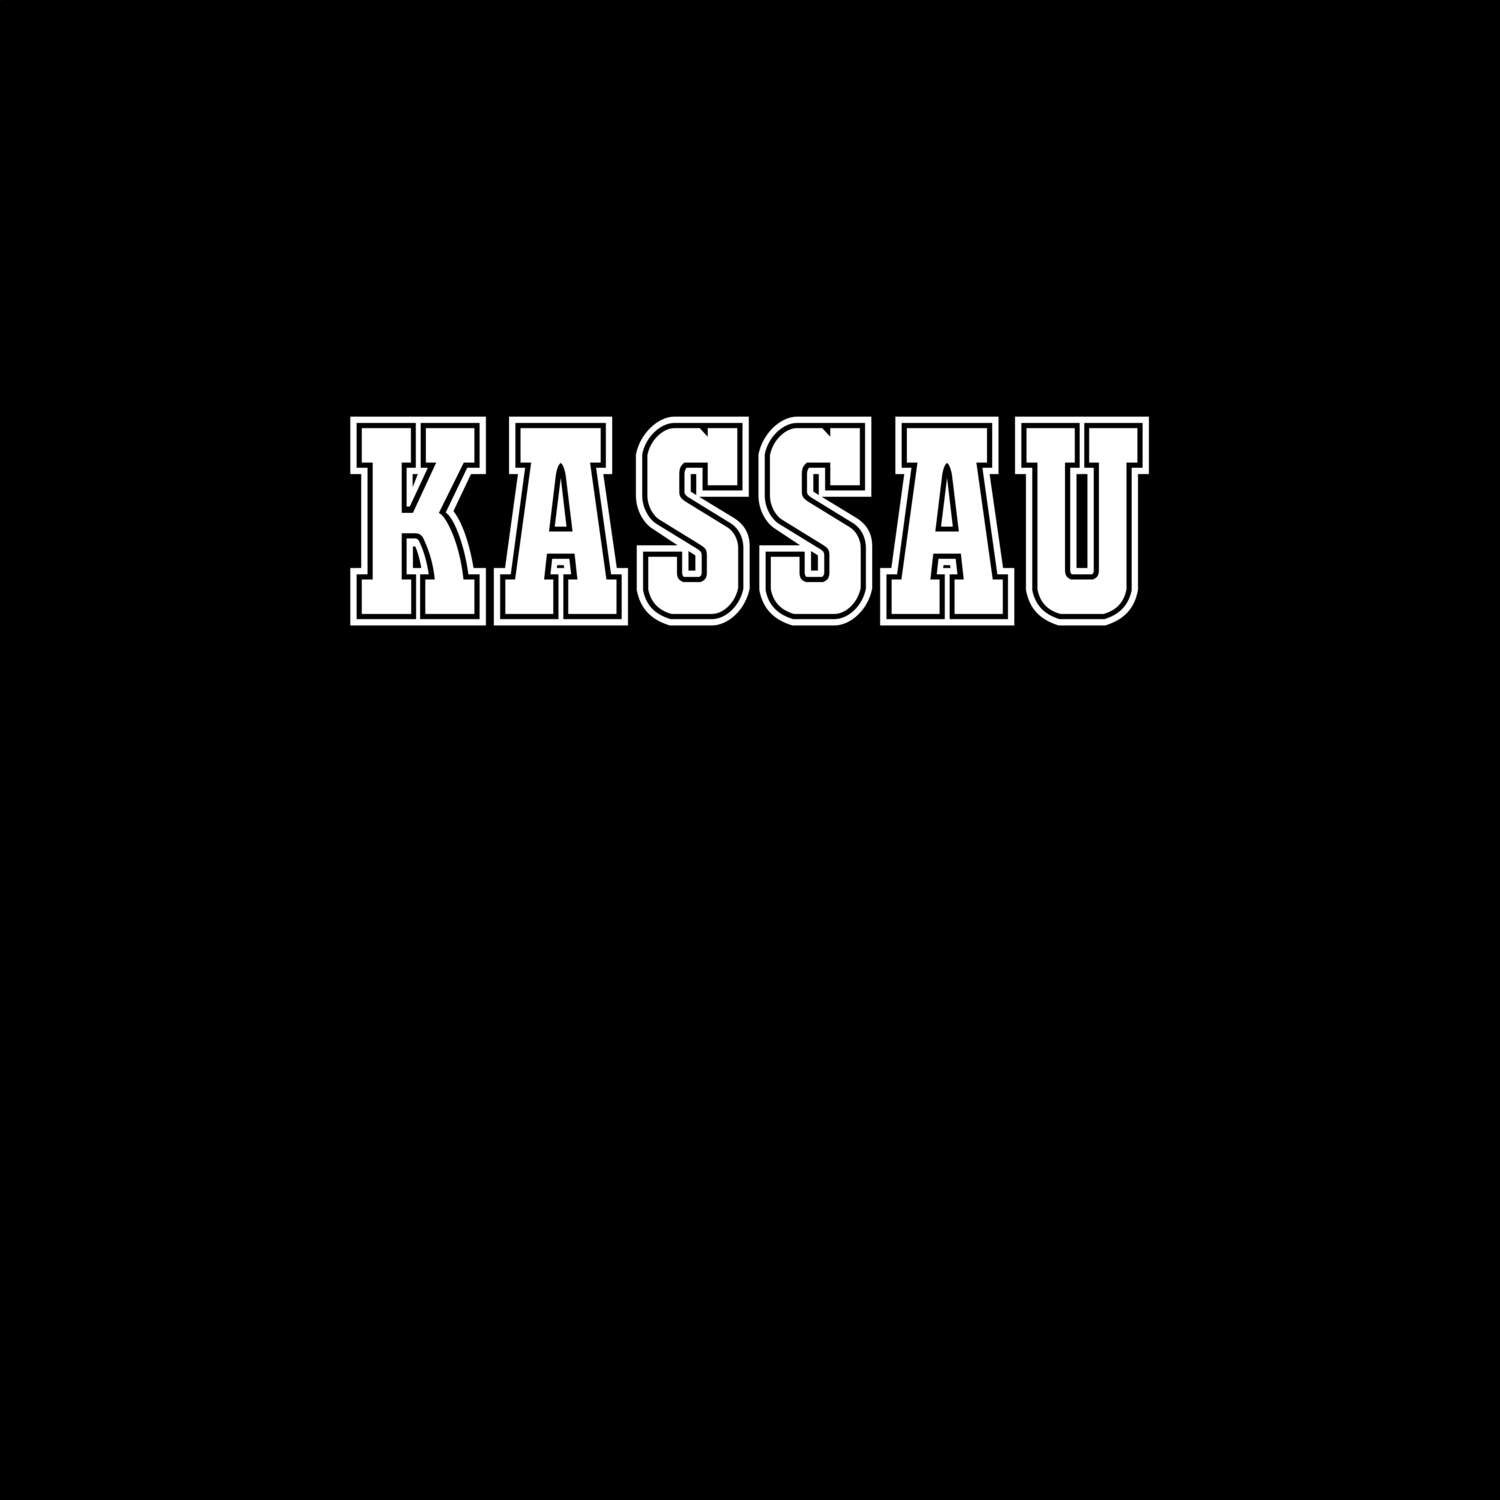 Kassau T-Shirt »Classic«